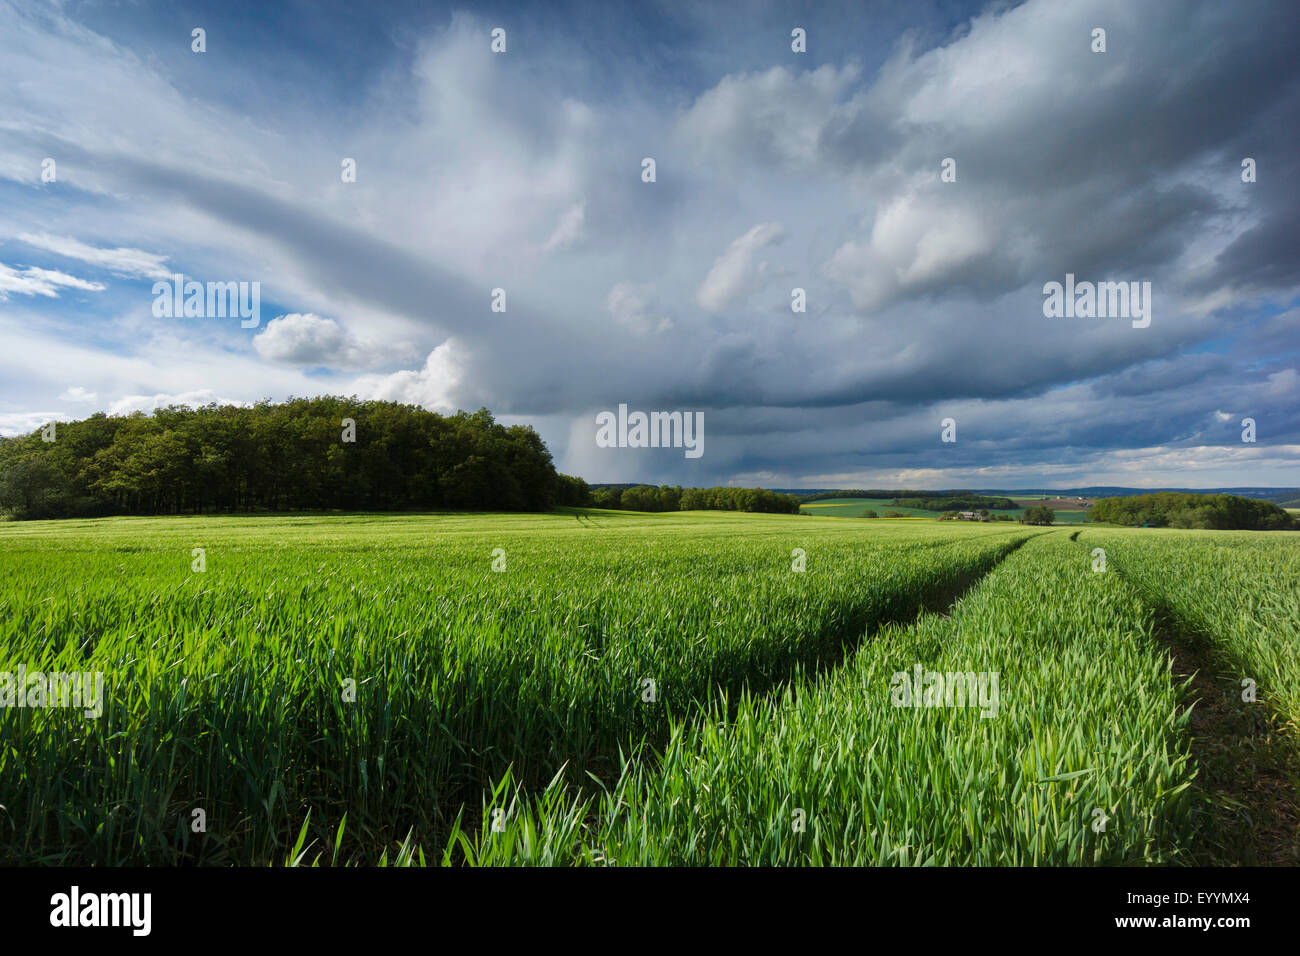 clouds above grain field, Germany, Saxony, Vogtland, Jocketa Stock Photo